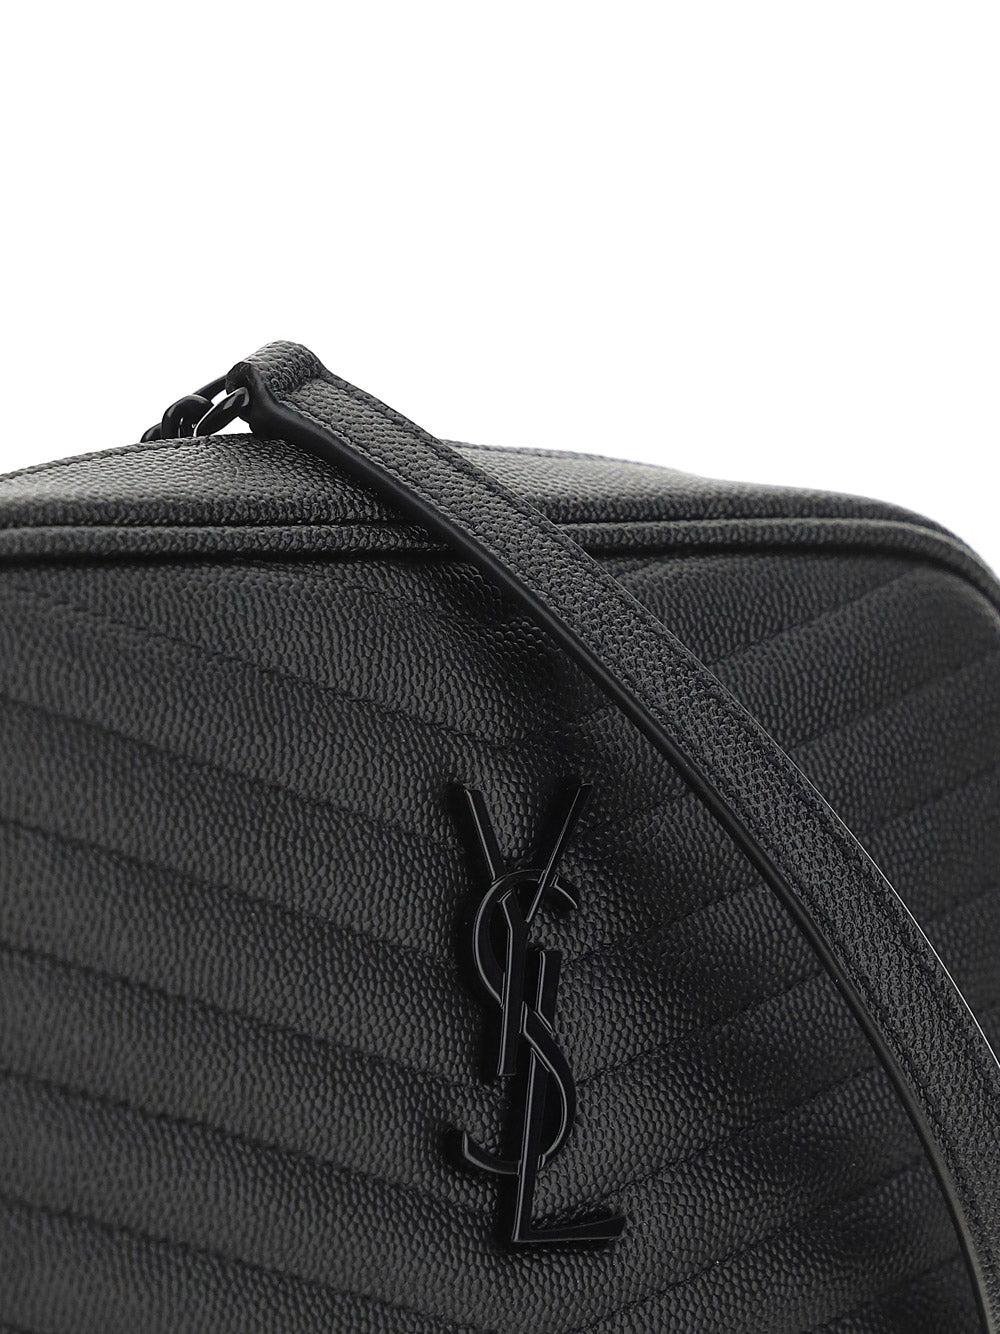 Saint Laurent black Lou mini quilted leather camera bag